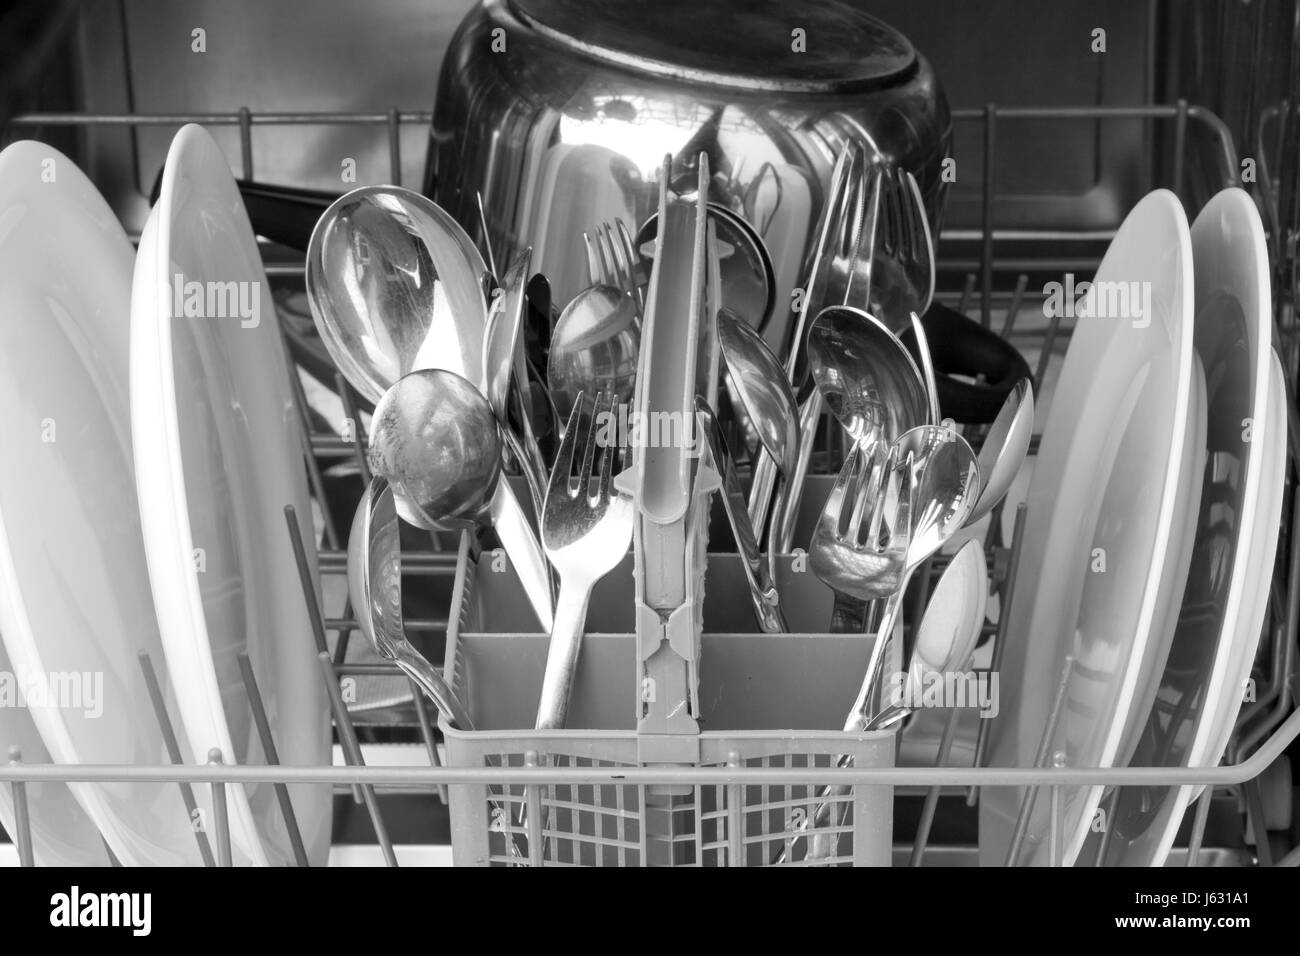 Haushalt Spülmaschine Geschirrspüler reinigen Besteck Geschirr reinigen Stockfoto